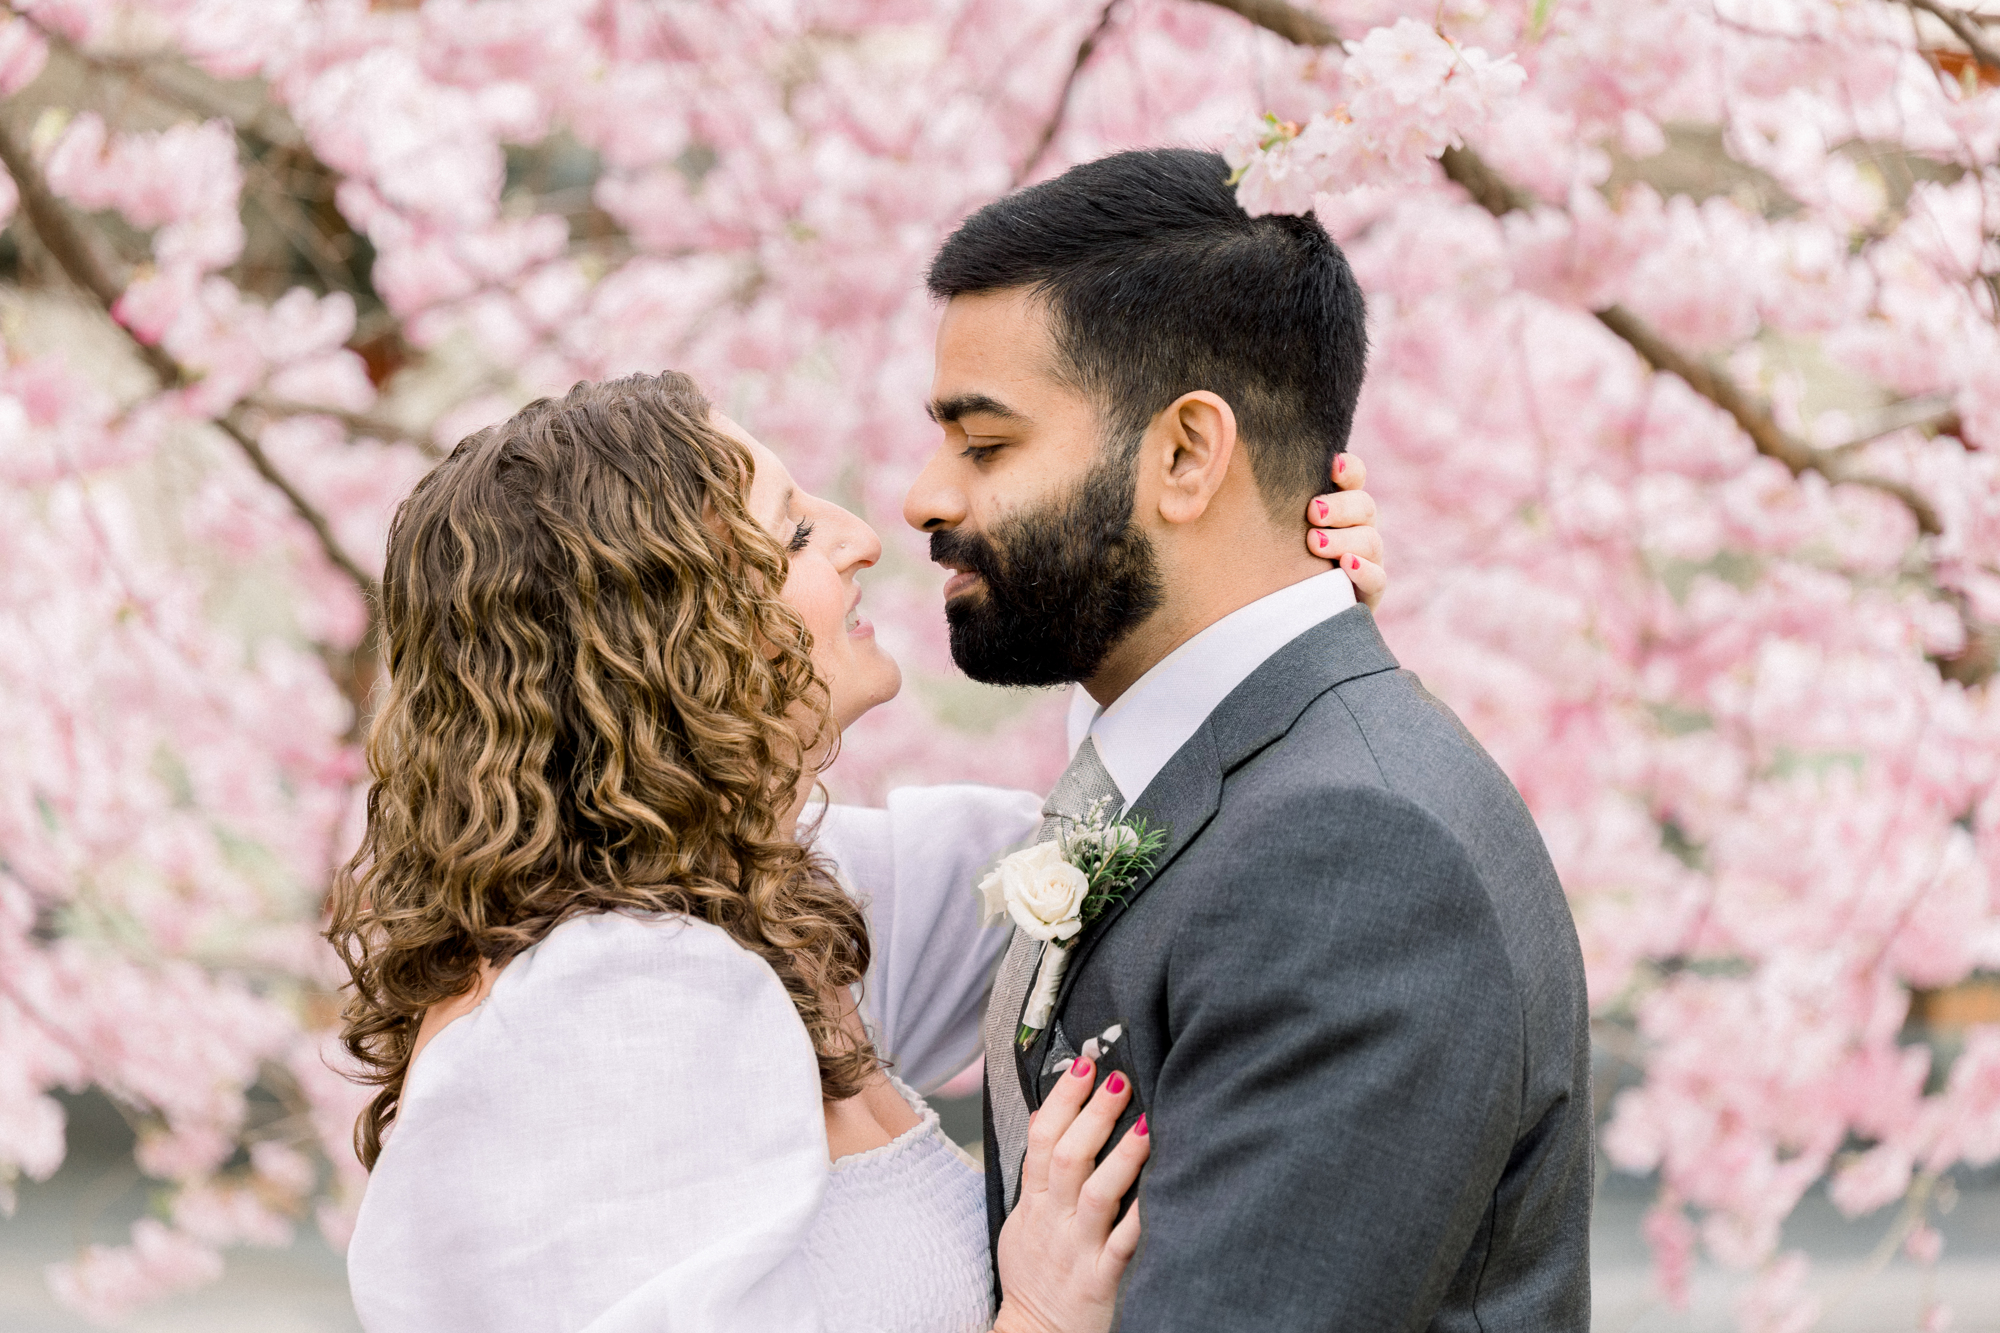 Breathtaking Prospect Park Wedding Photos with Springtime Cherry Blossoms